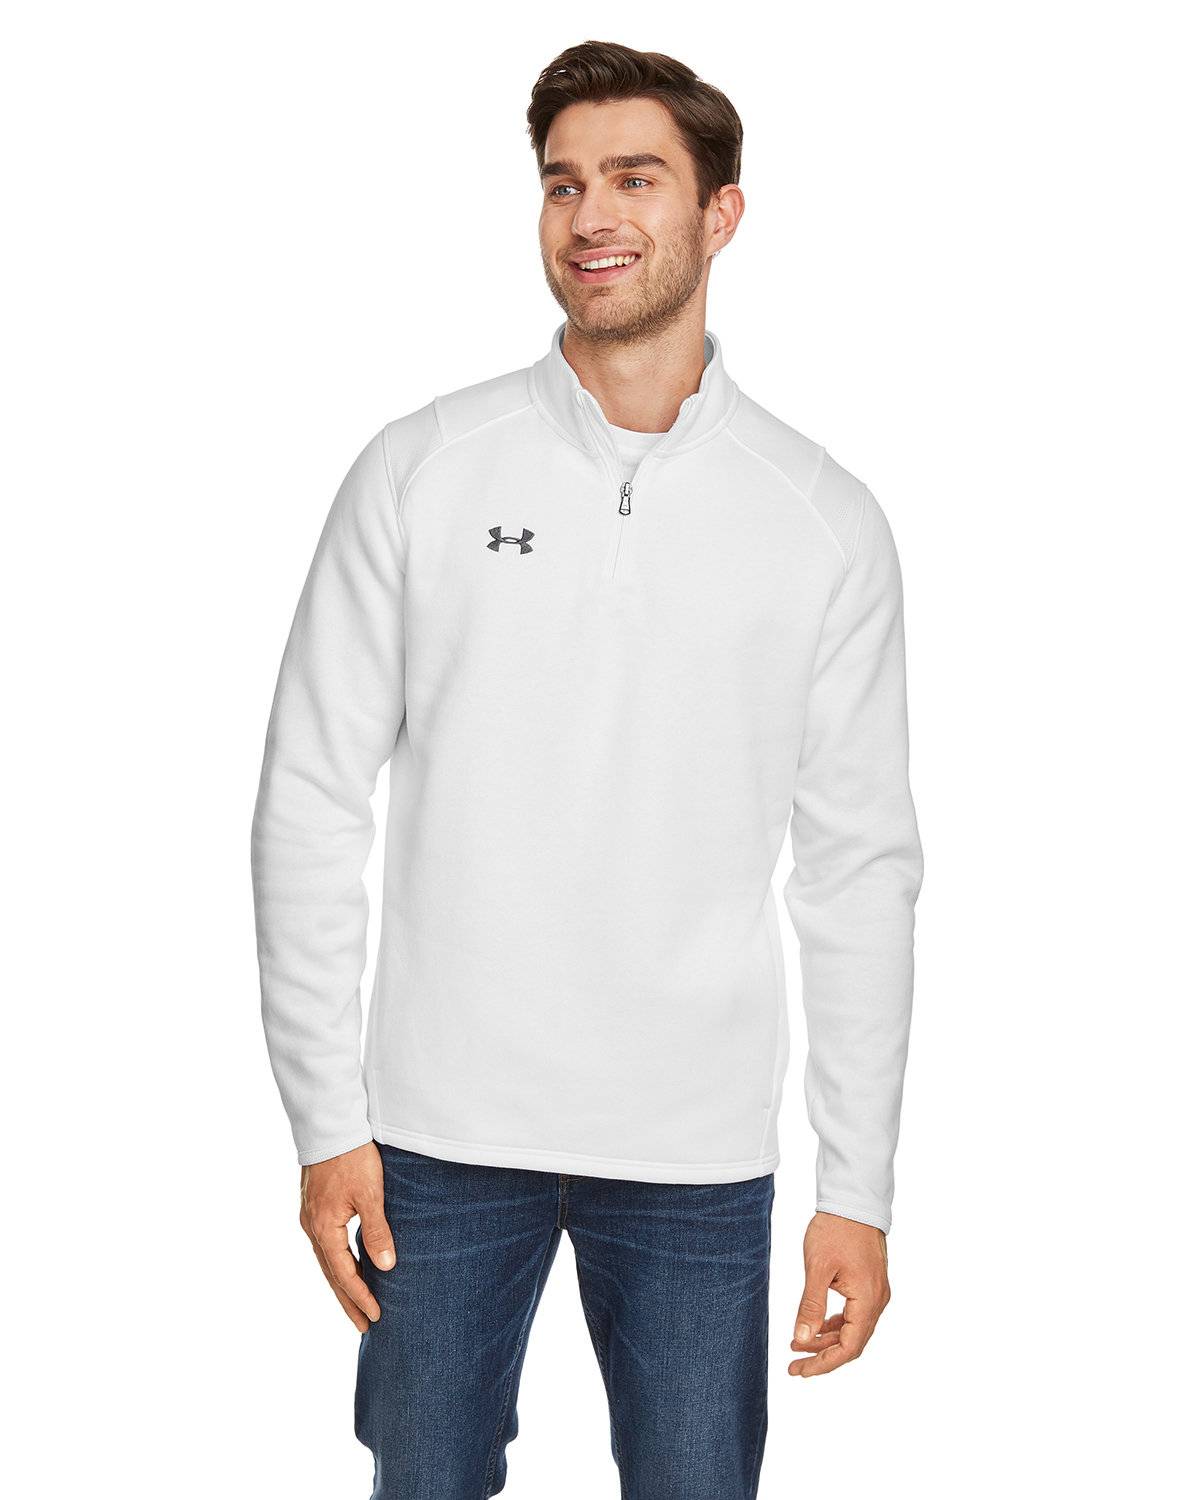 Download Under Armour 1310071 Custom Screen Printed Mens Hustle Quarter Zip Pullover Sweatshirt